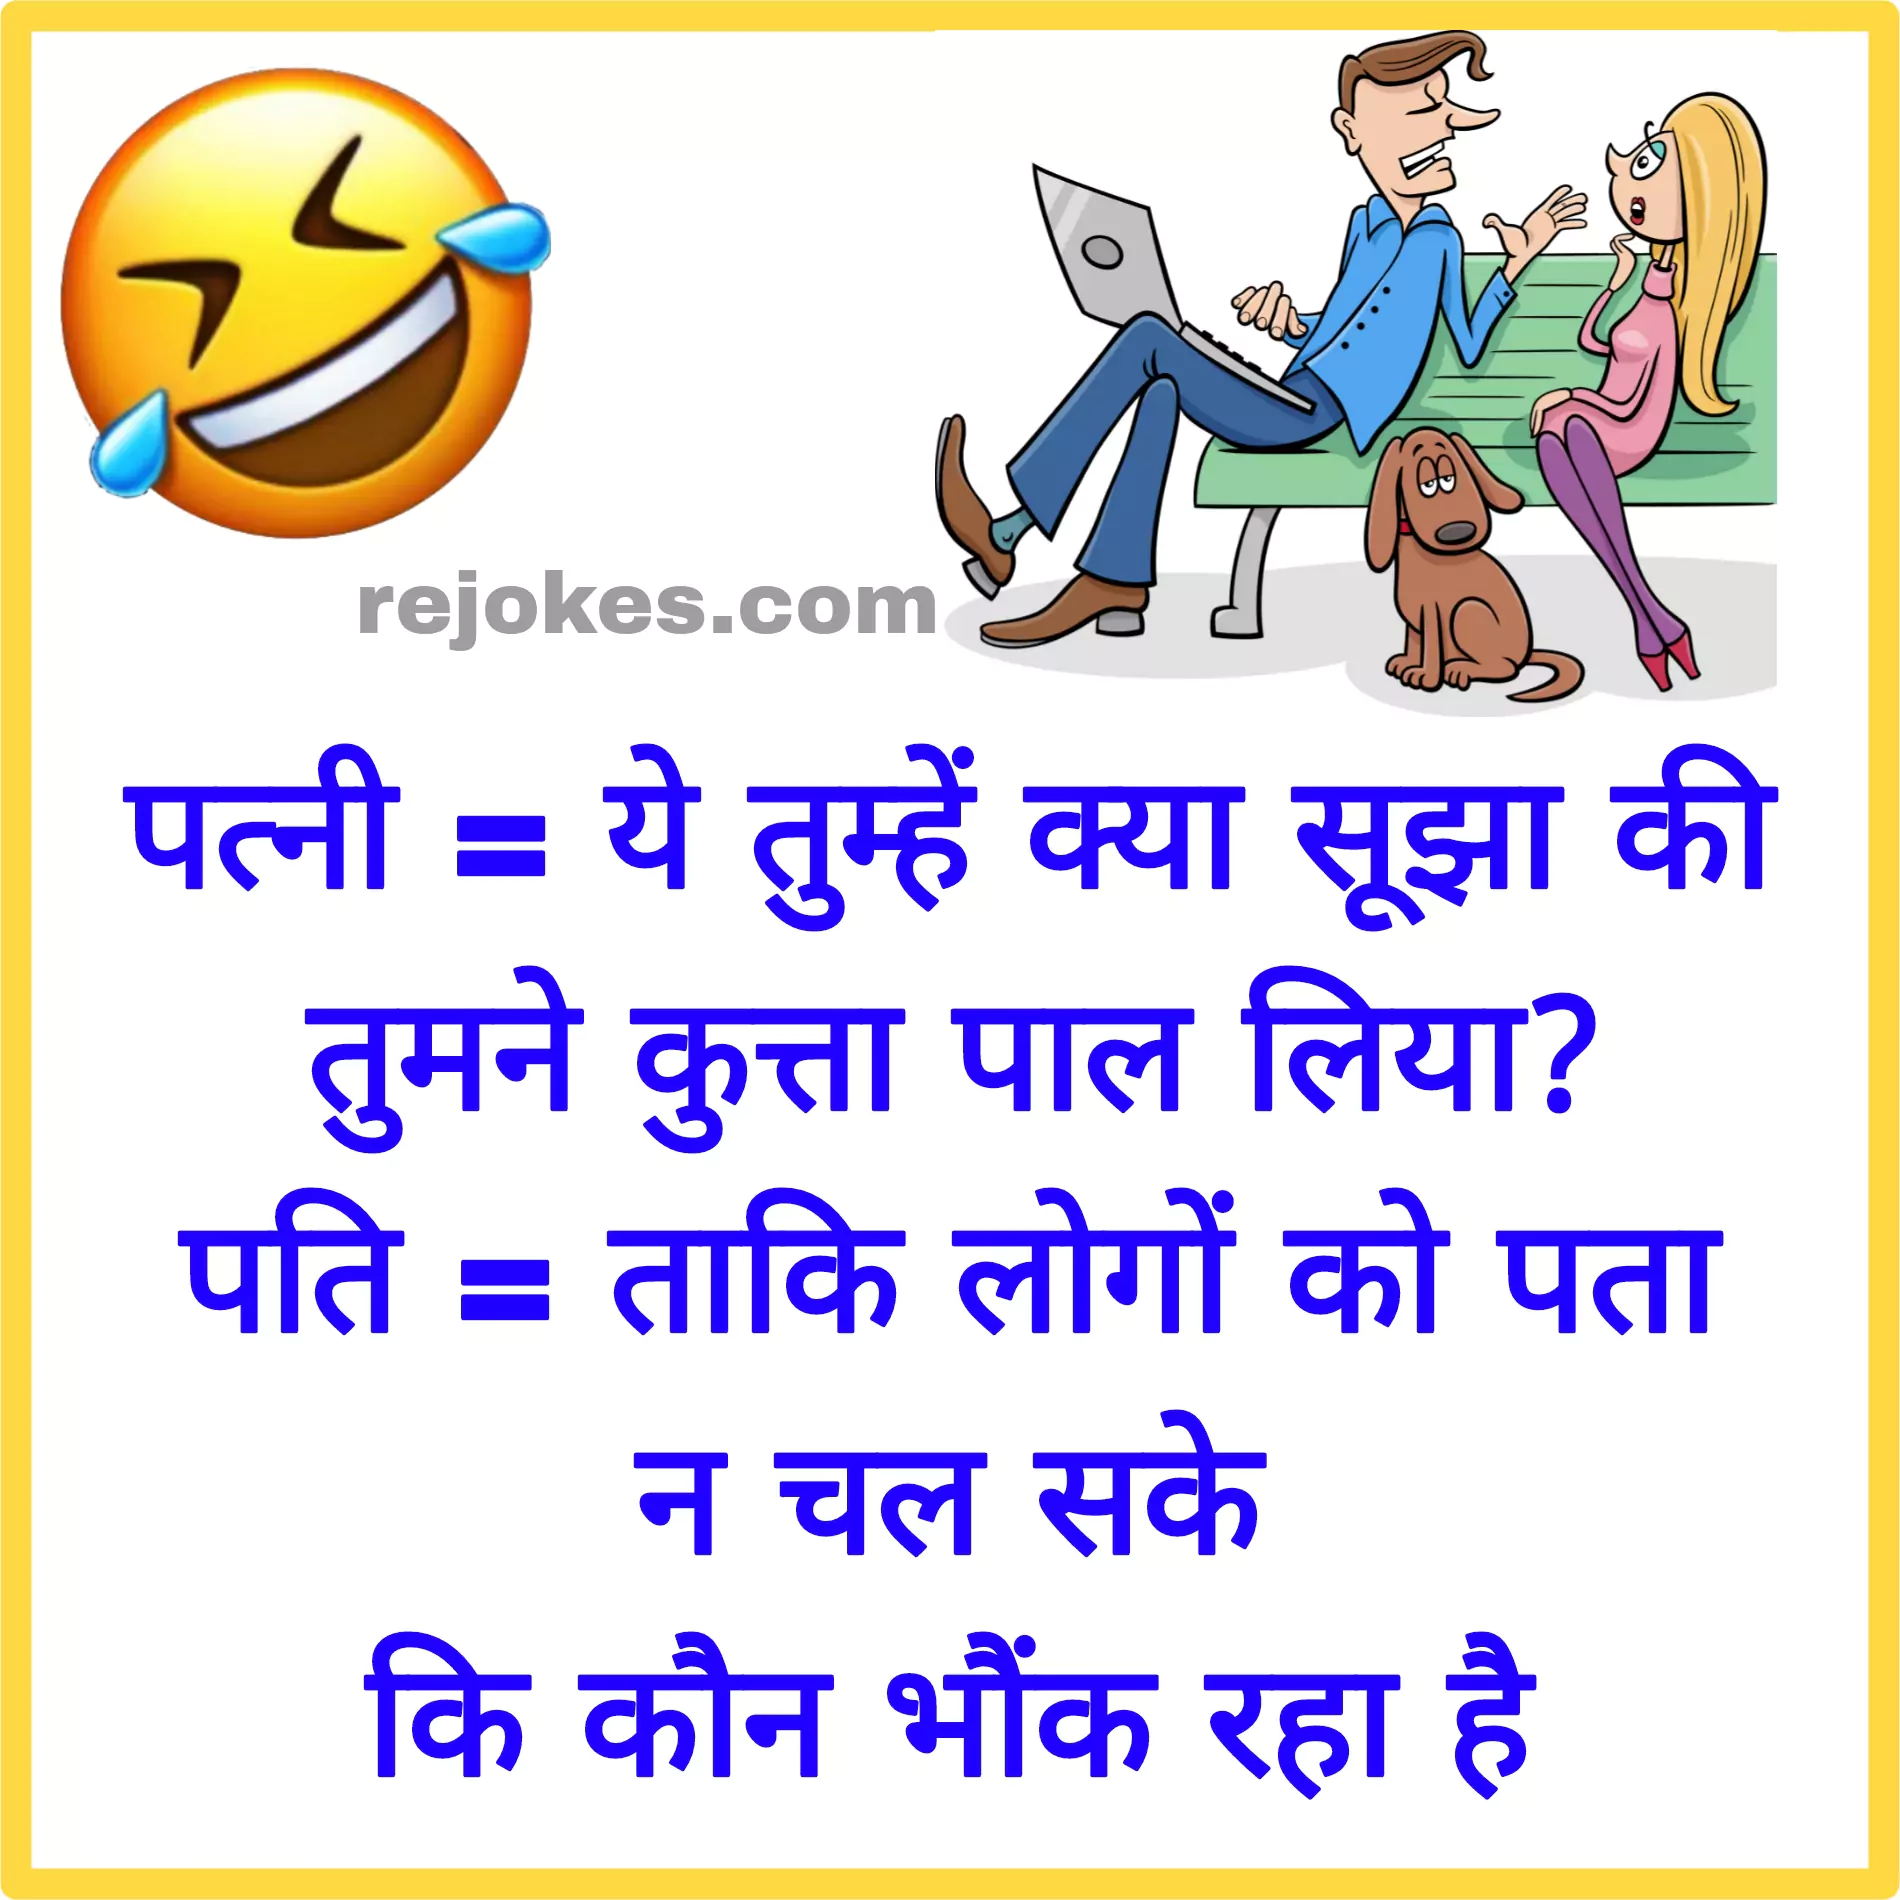 husband-wife-jokes-in-hindi-images